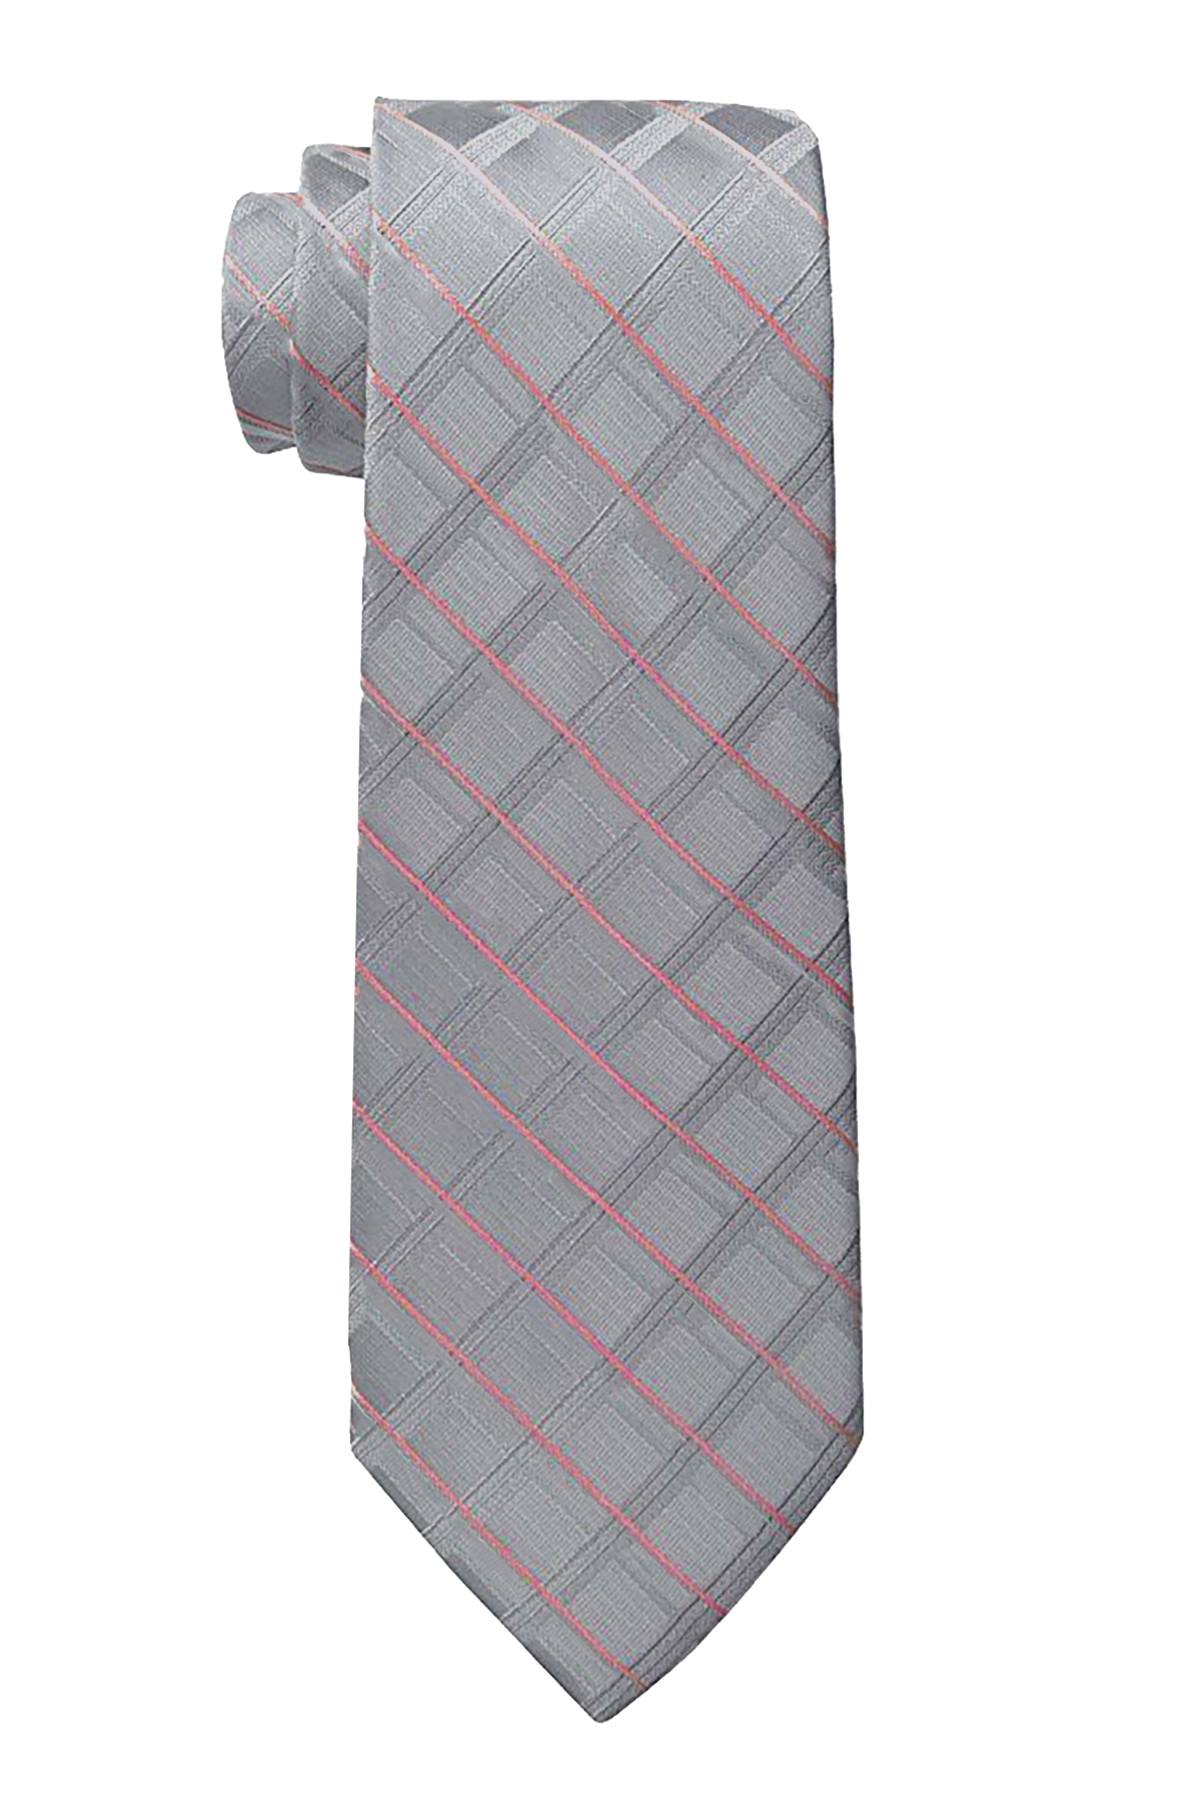 Michael Kors Silver/Pink Small Shadow-Grid Slim Silk Necktie